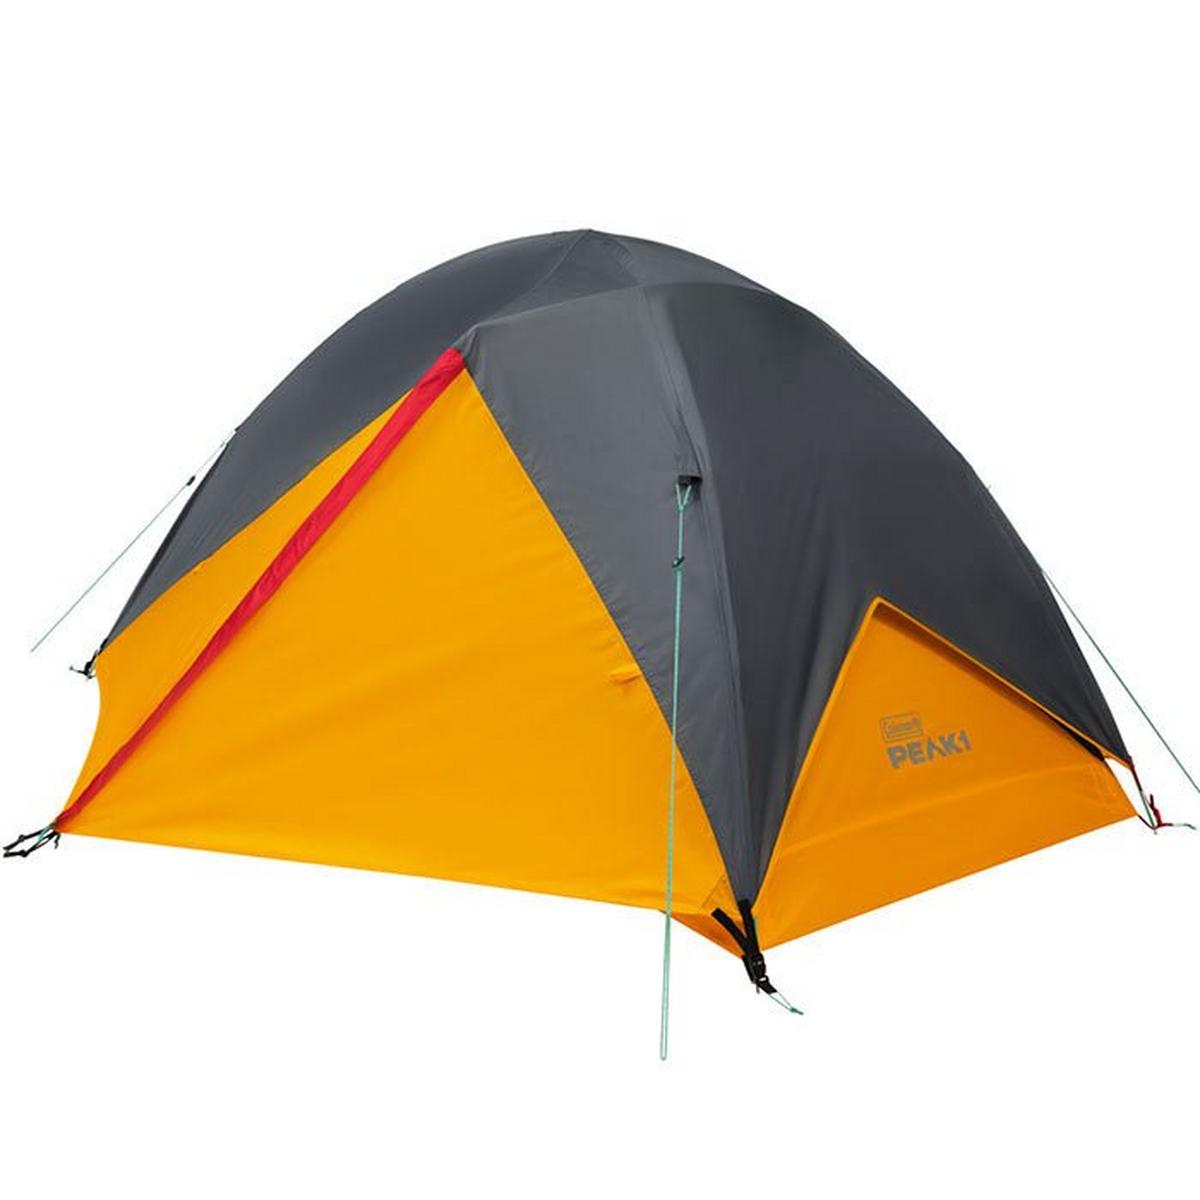 PEAK1™ 2P Backpacking Tent